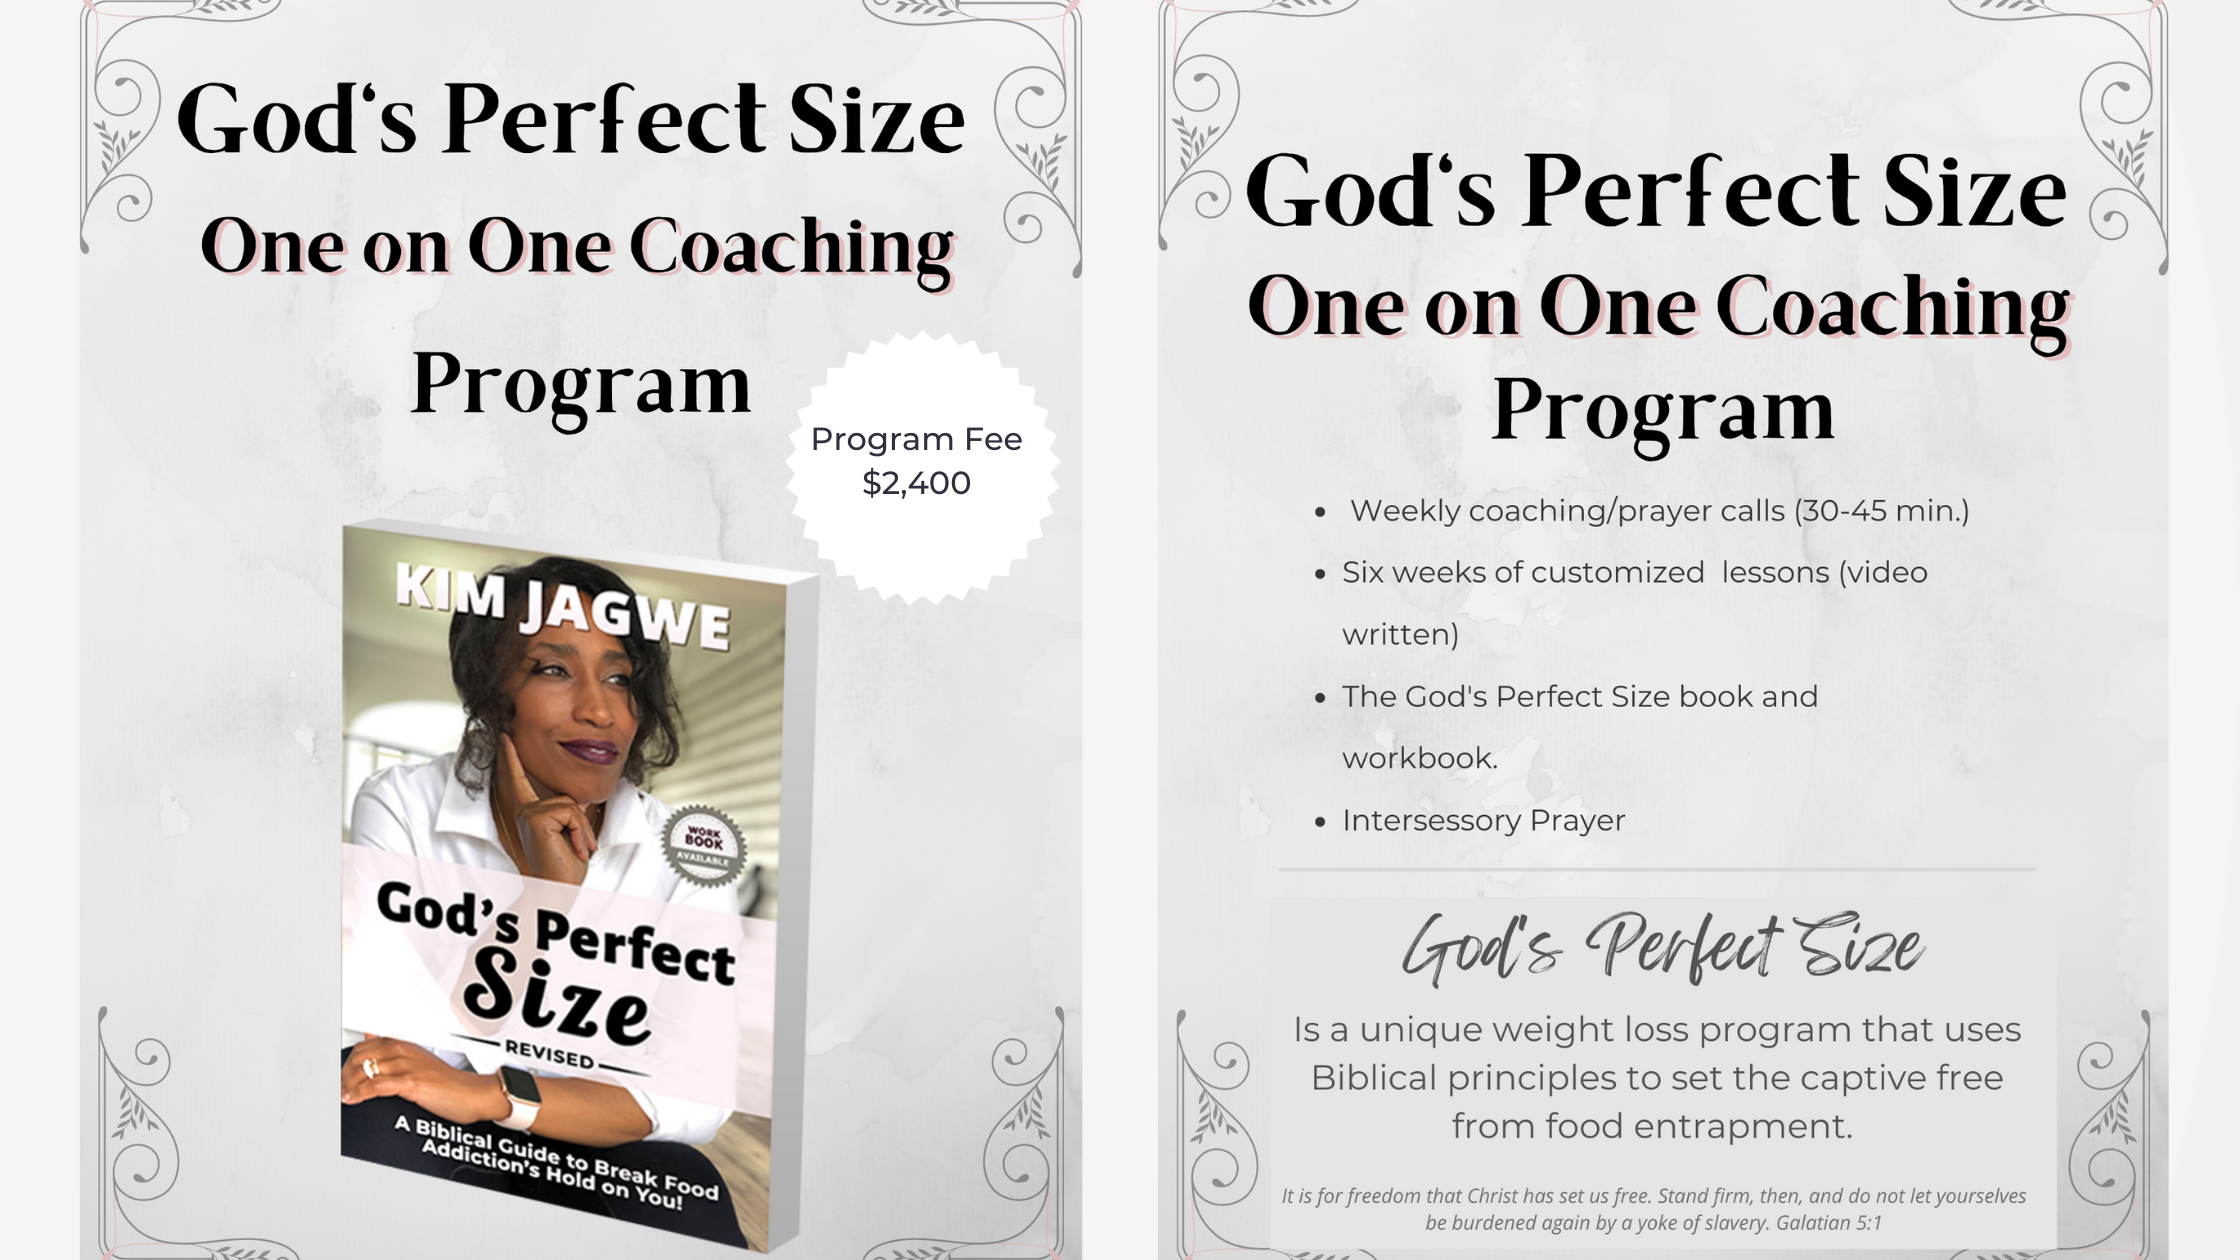 God’s Perfect Size: One on One Coaching Program